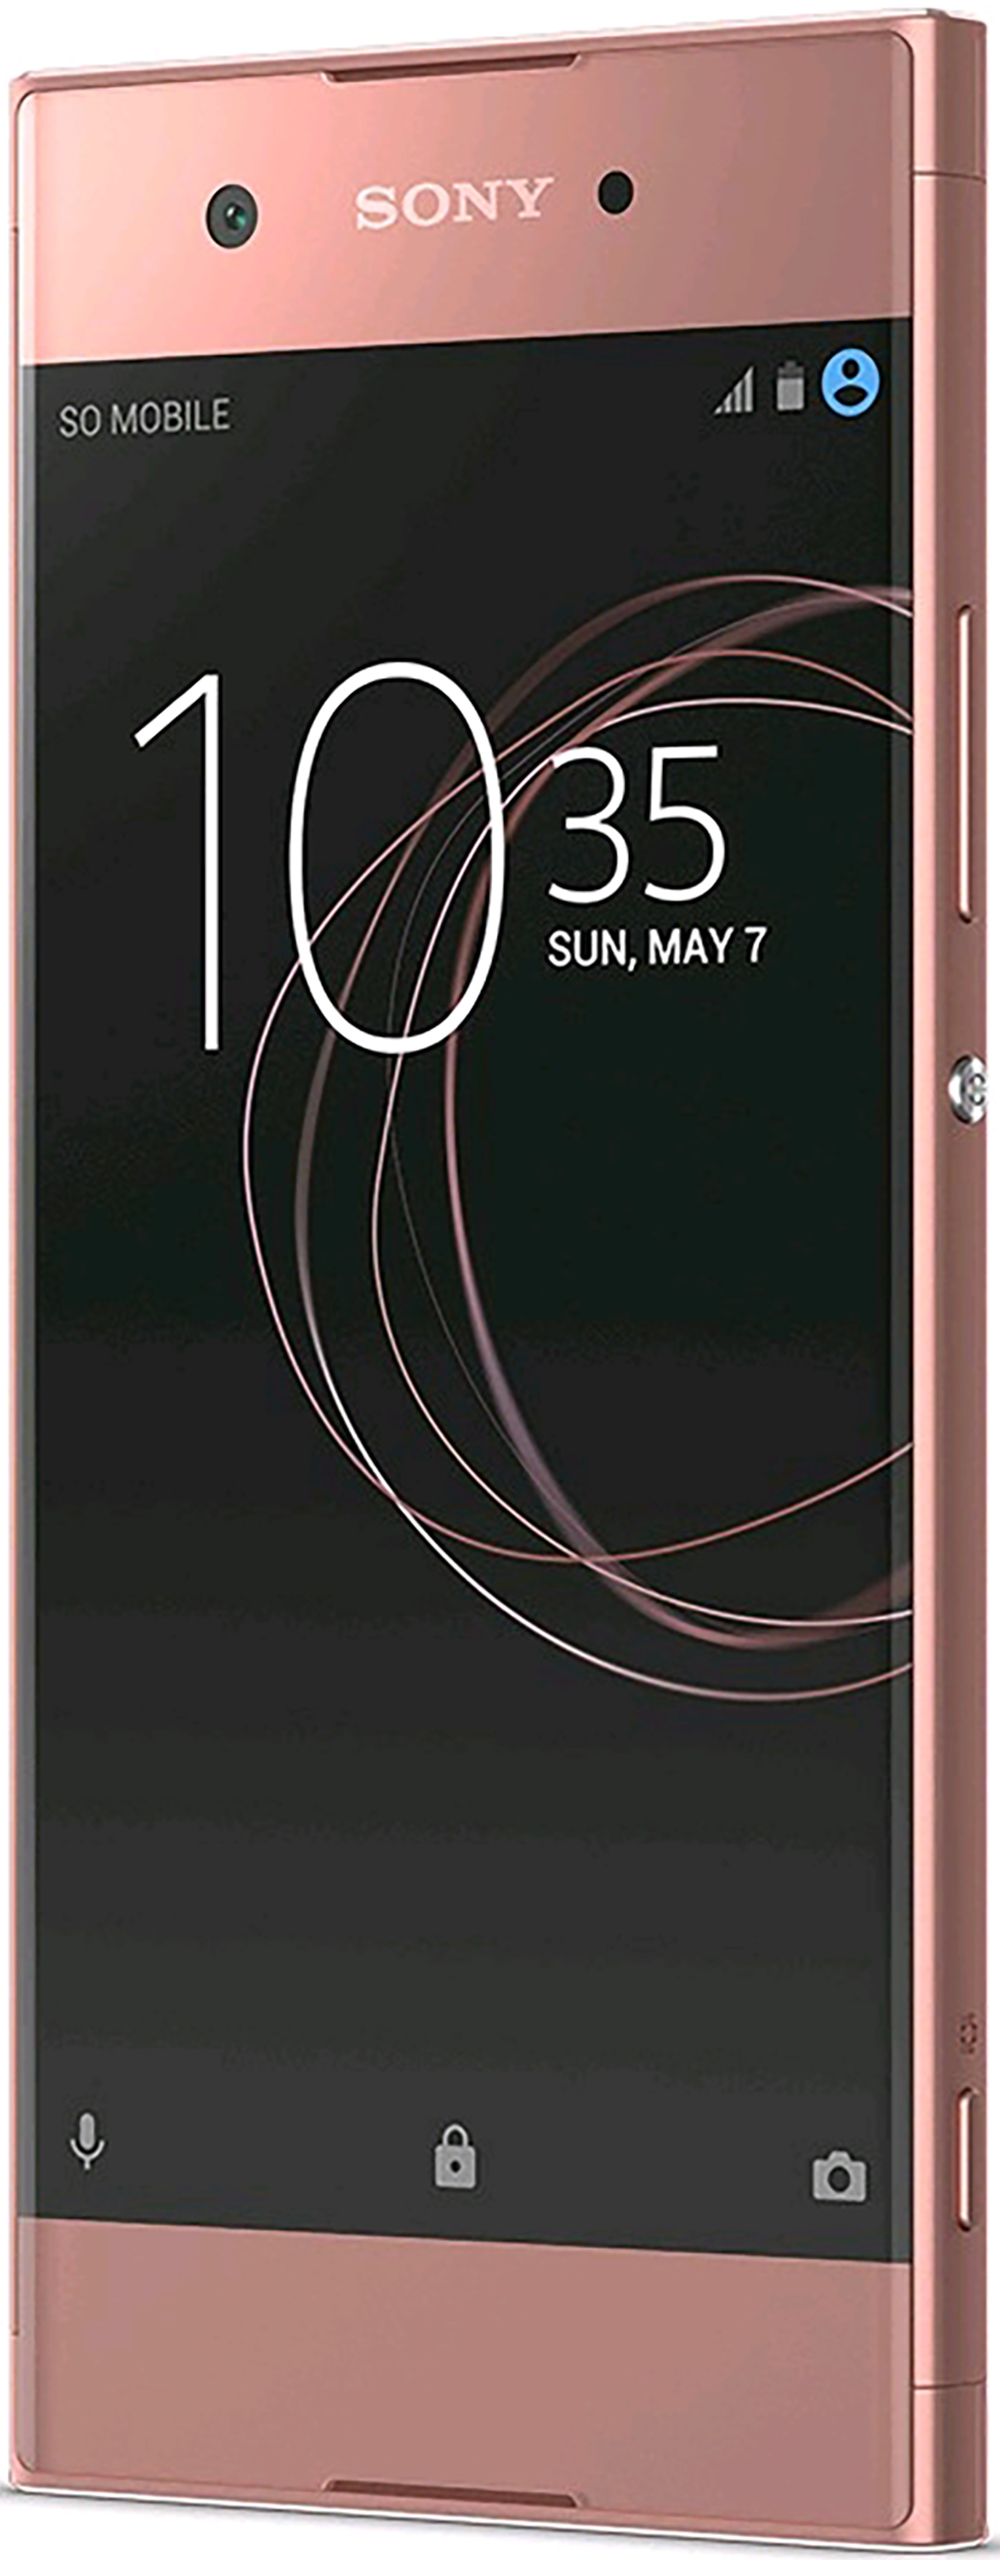 Sony Xperia XA1 G3123 32GB Unlocked GSM LTE Octa-Core Phone w/ 23MP Camera - Pink - image 4 of 4